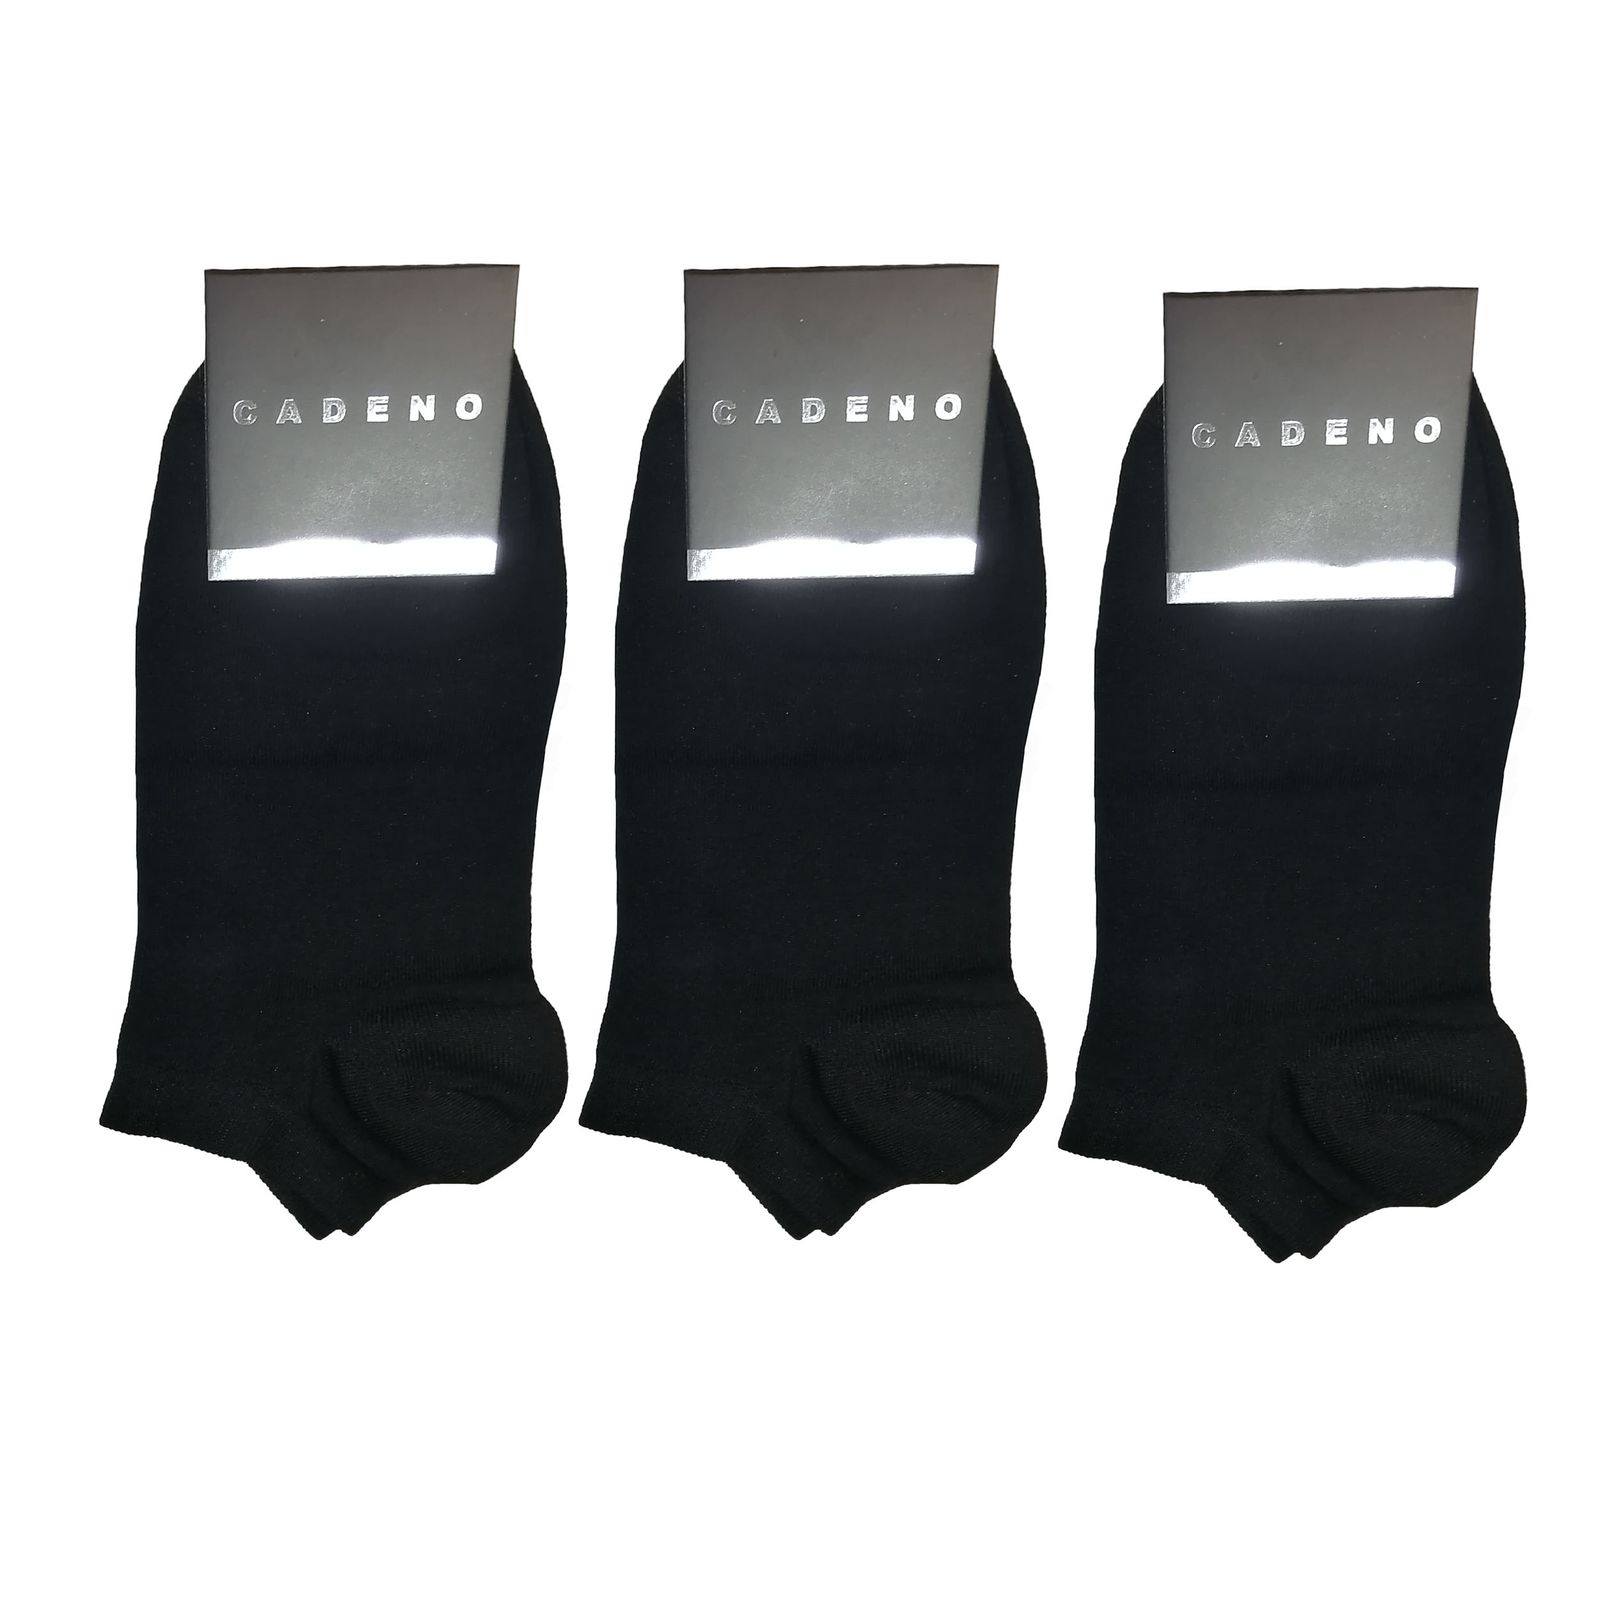 جوراب مردانه کادنو مدل CAM03 بسته 3 عددی -  - 1